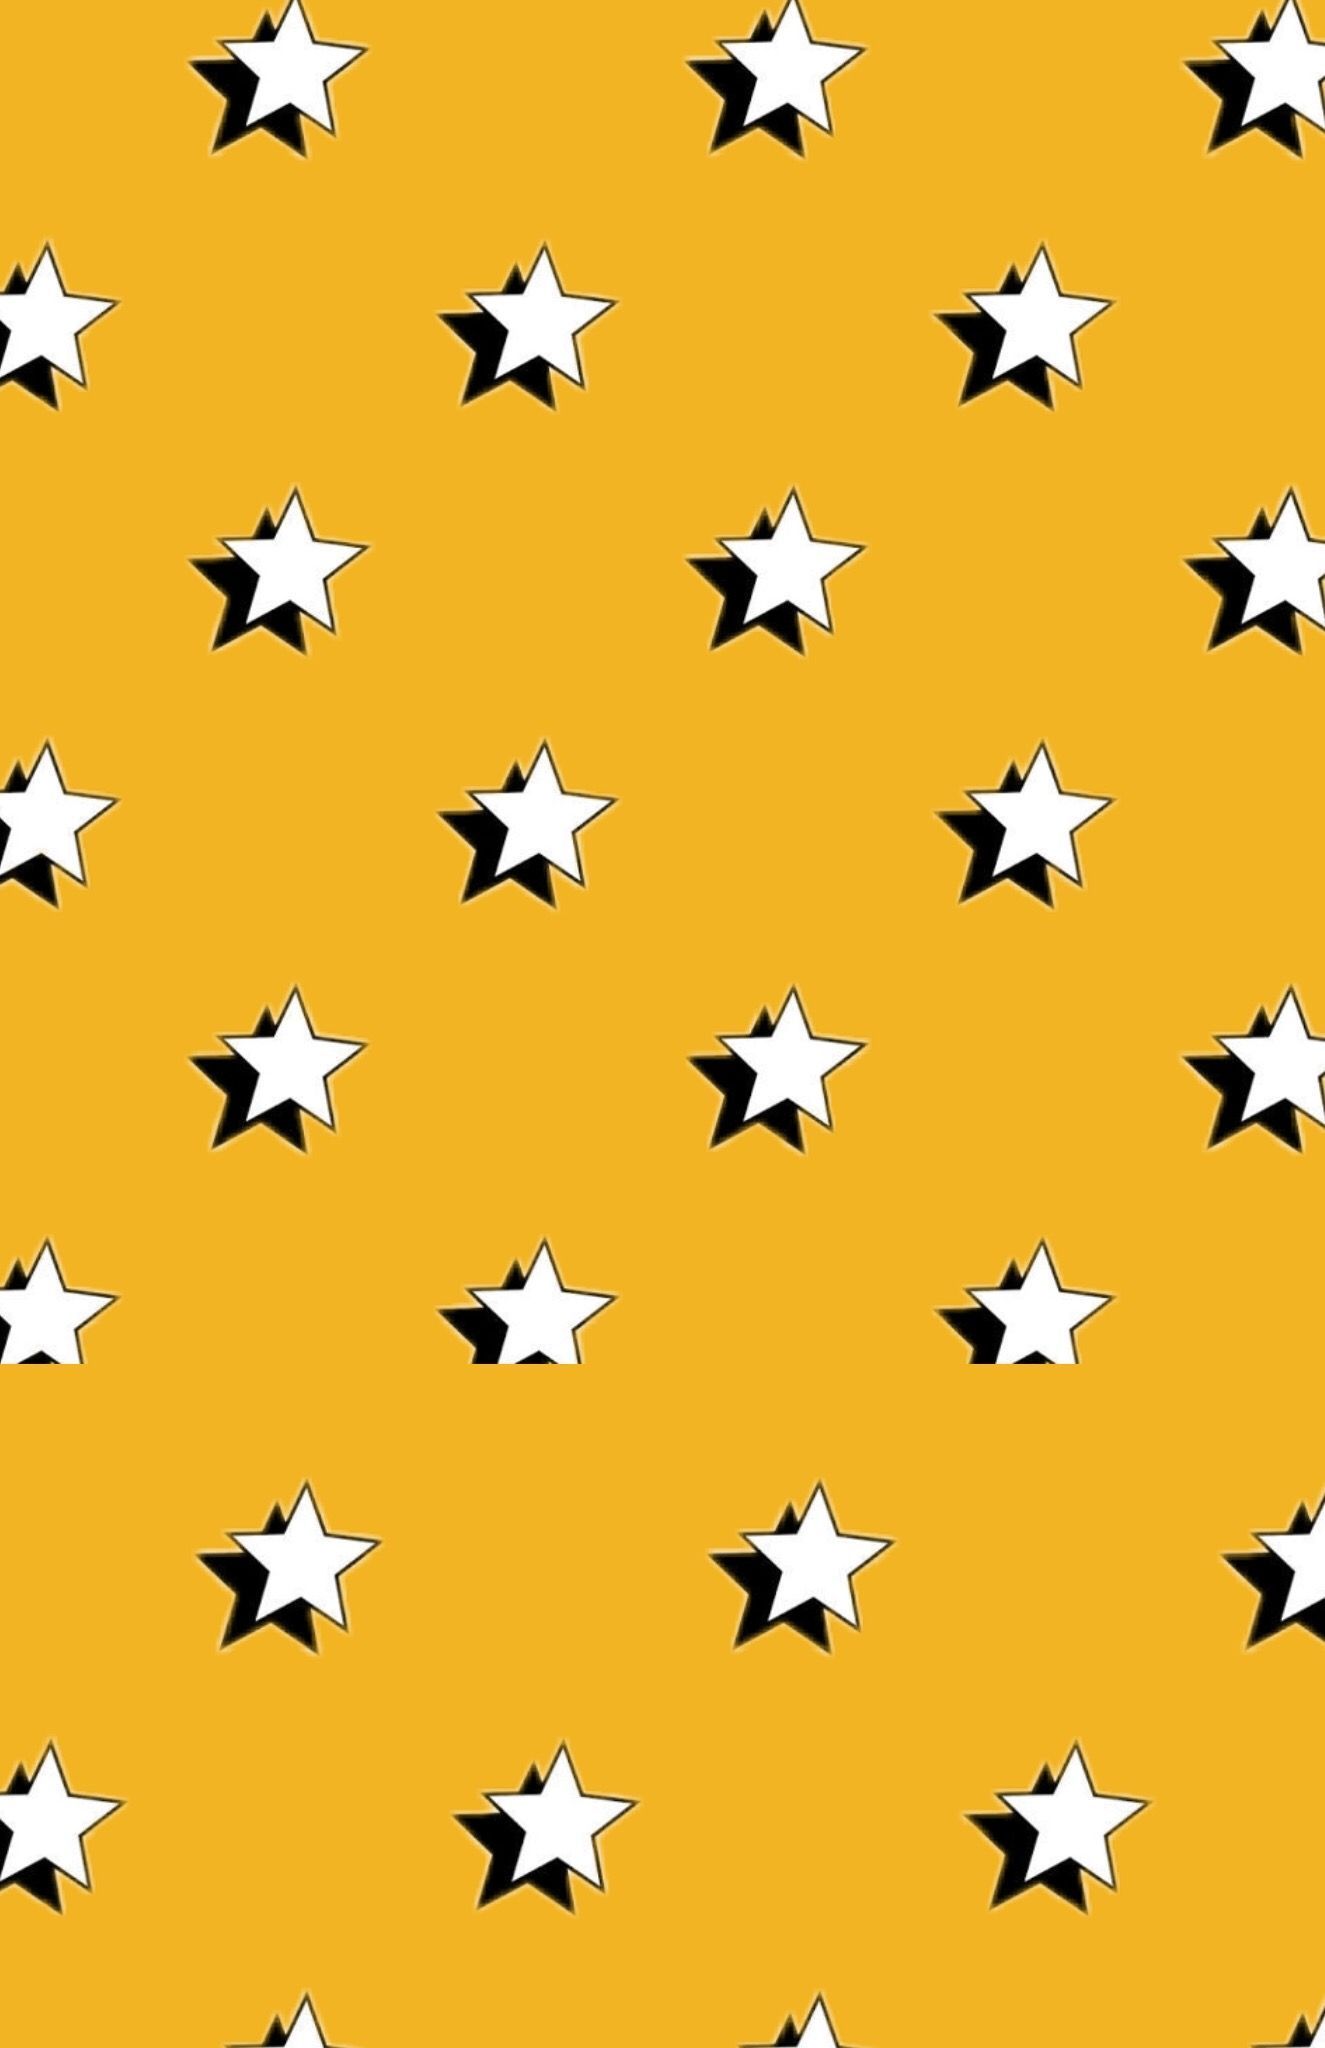 Yellow Star Wallpaper Free Yellow Star Background